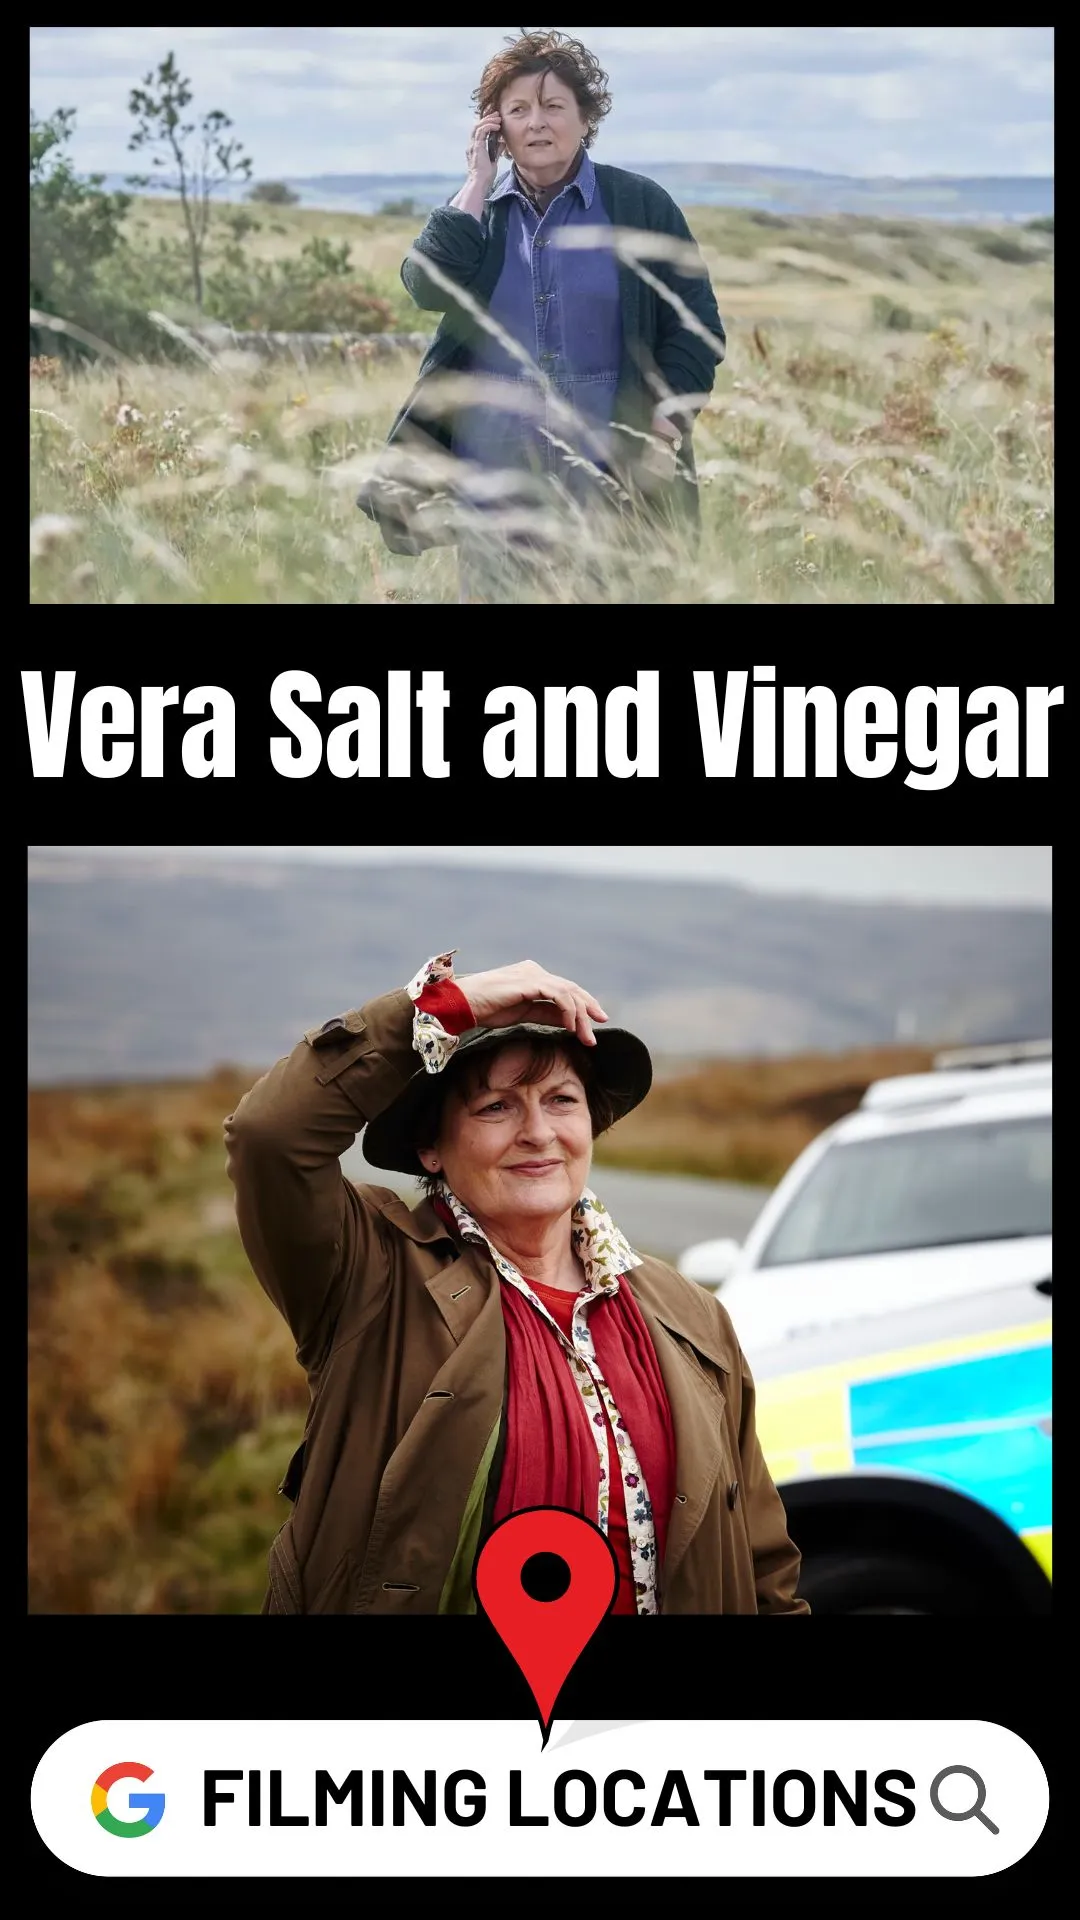 Vera Salt and Vinegar Filming Locations